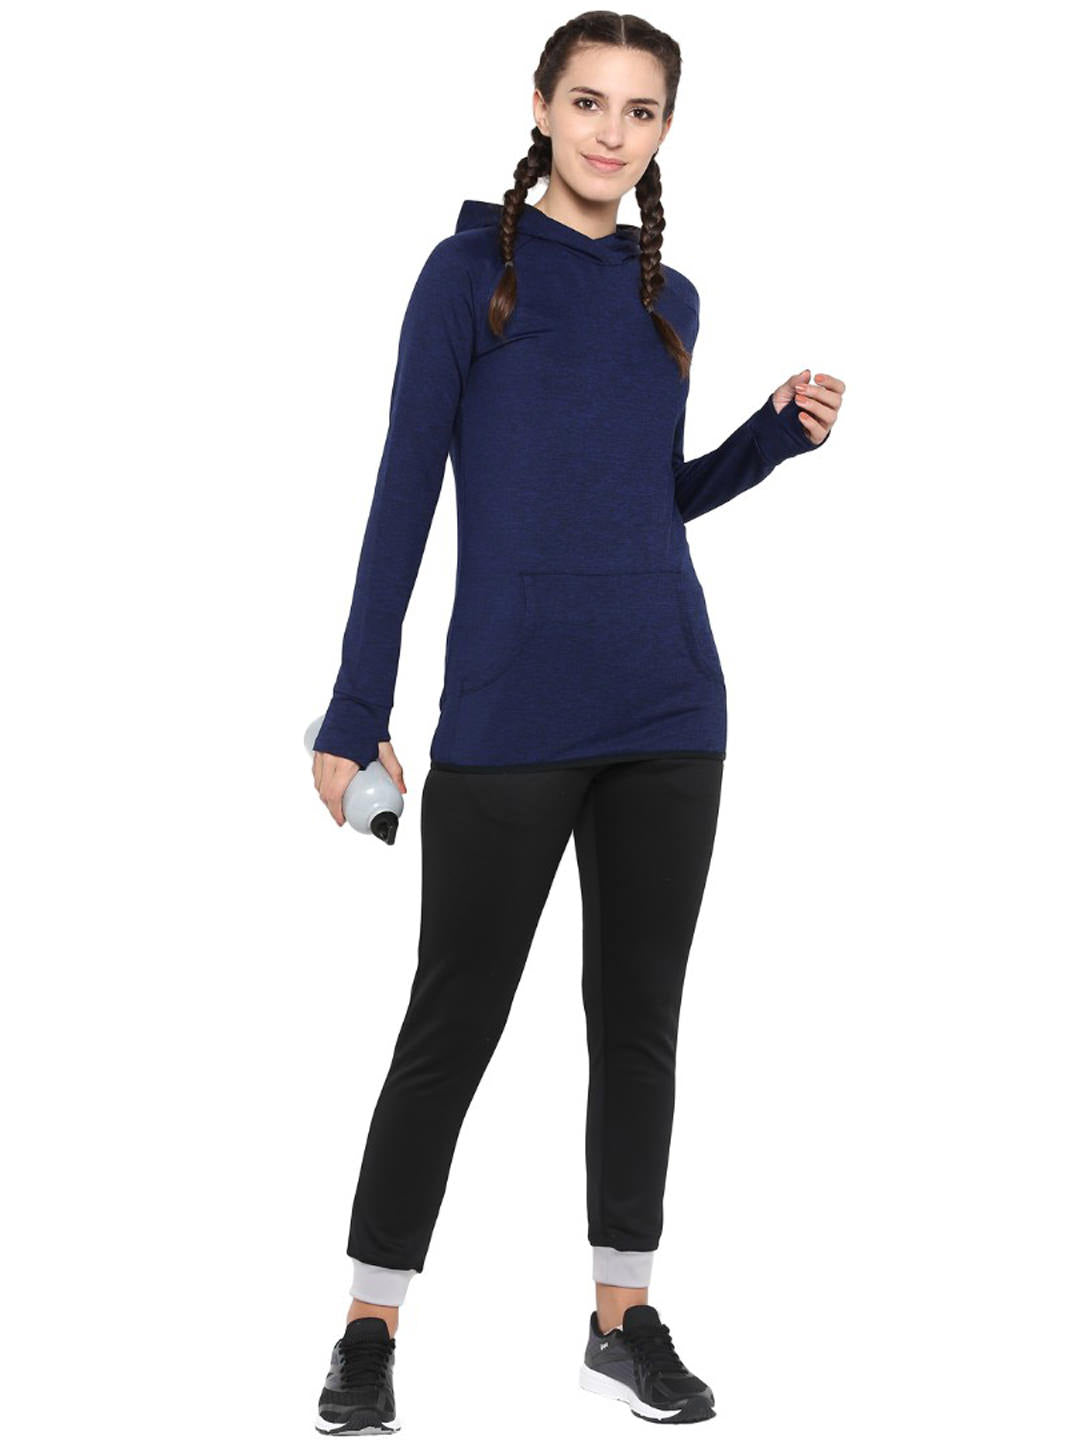 Alcis Women Navy Blue Solid Hooded Sweatshirt